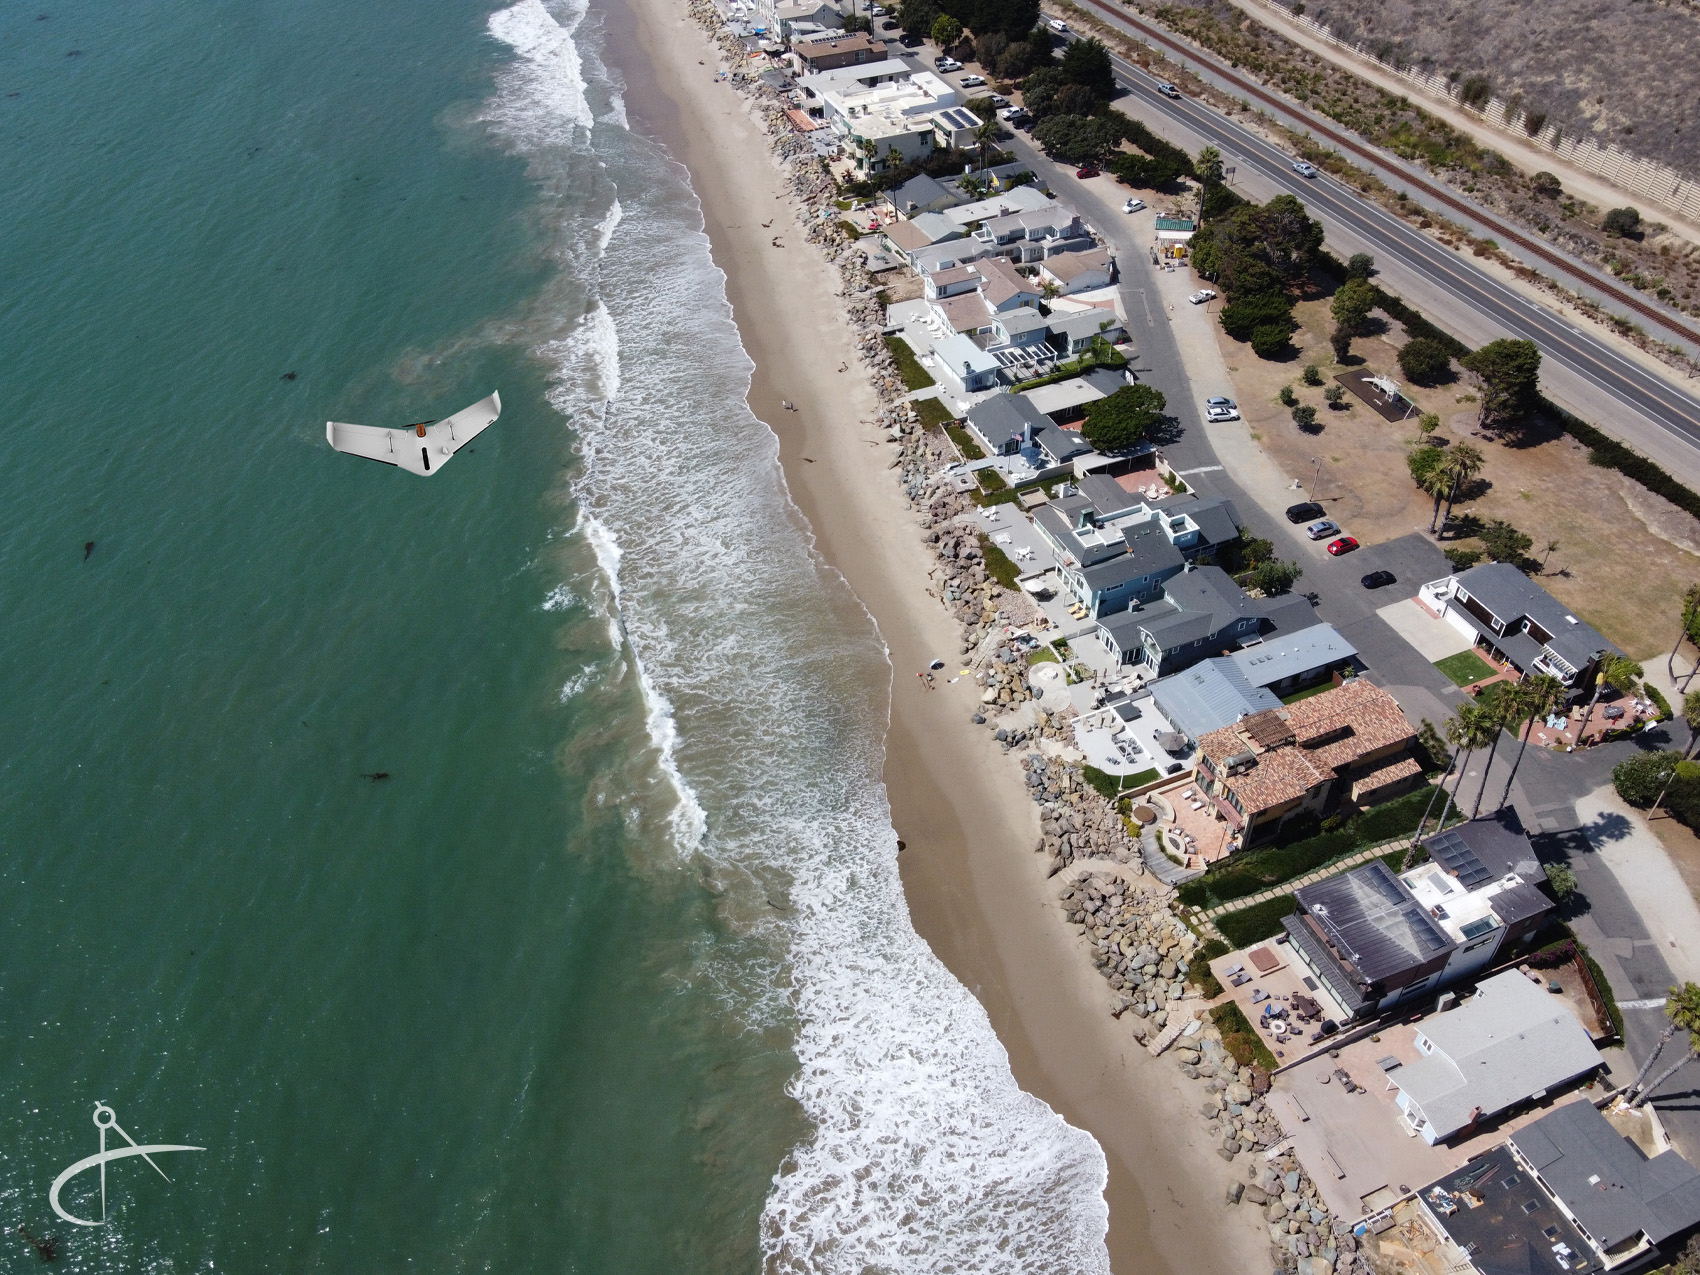 UX-11 drone surveying the coast.